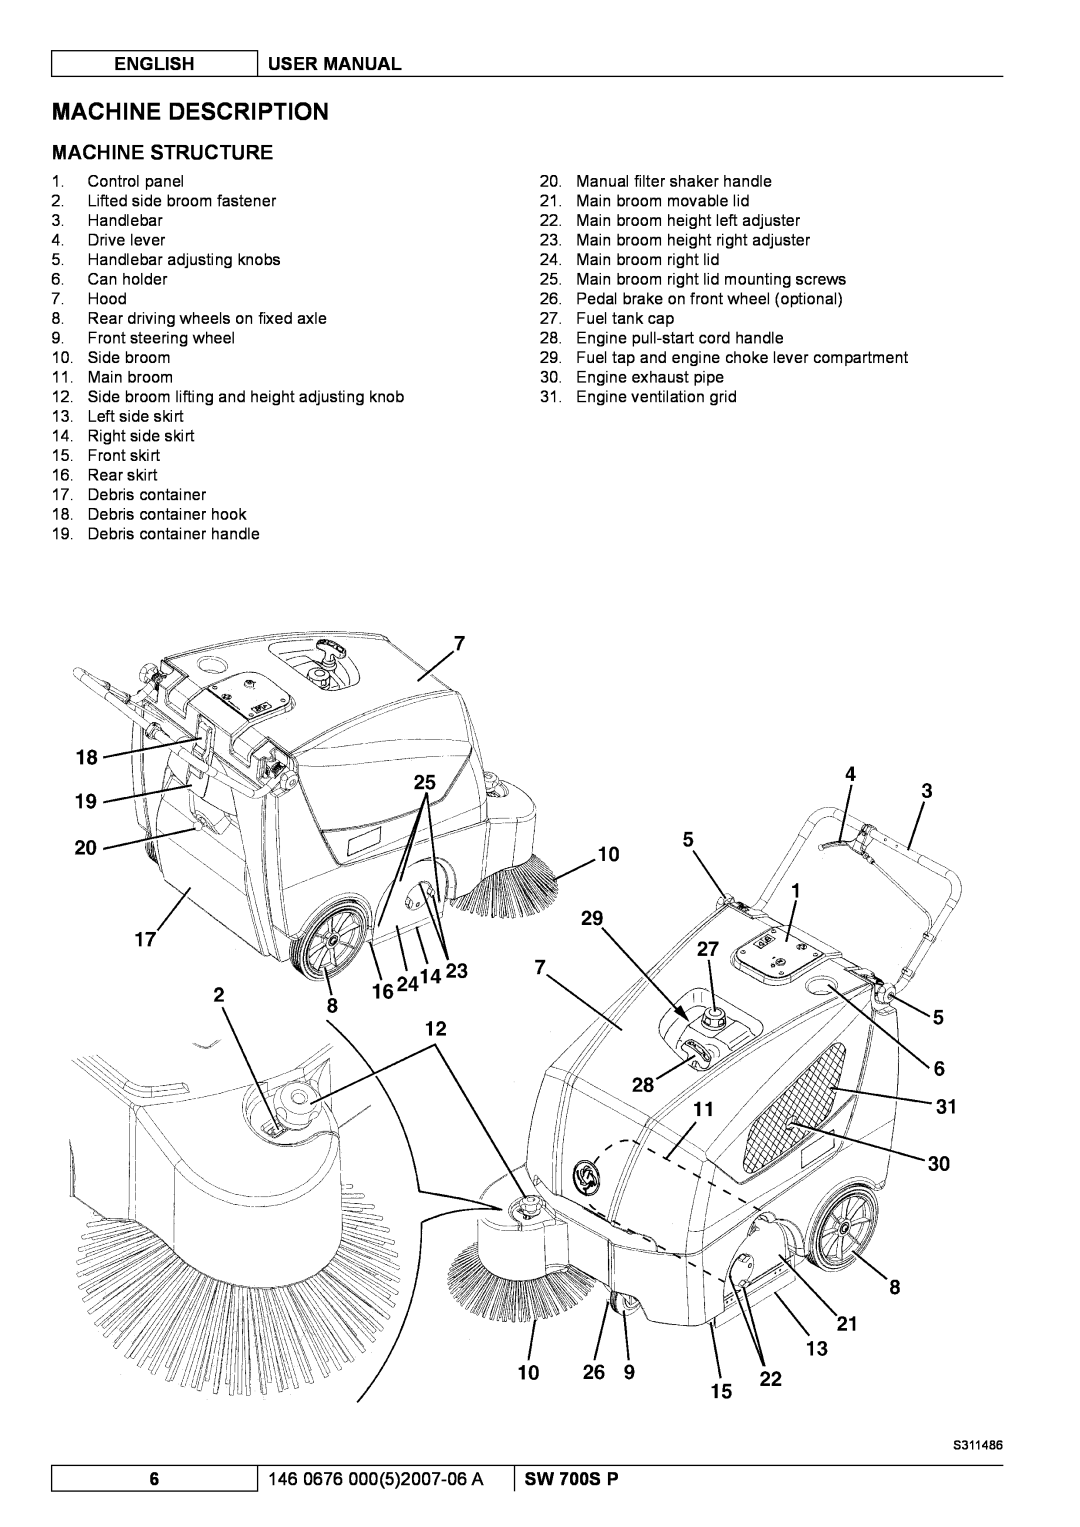 Nilfisk-Advance America SW 700S P Machine Description, Machine Structure, English, User Manual, 146 0676 00052007-06A 